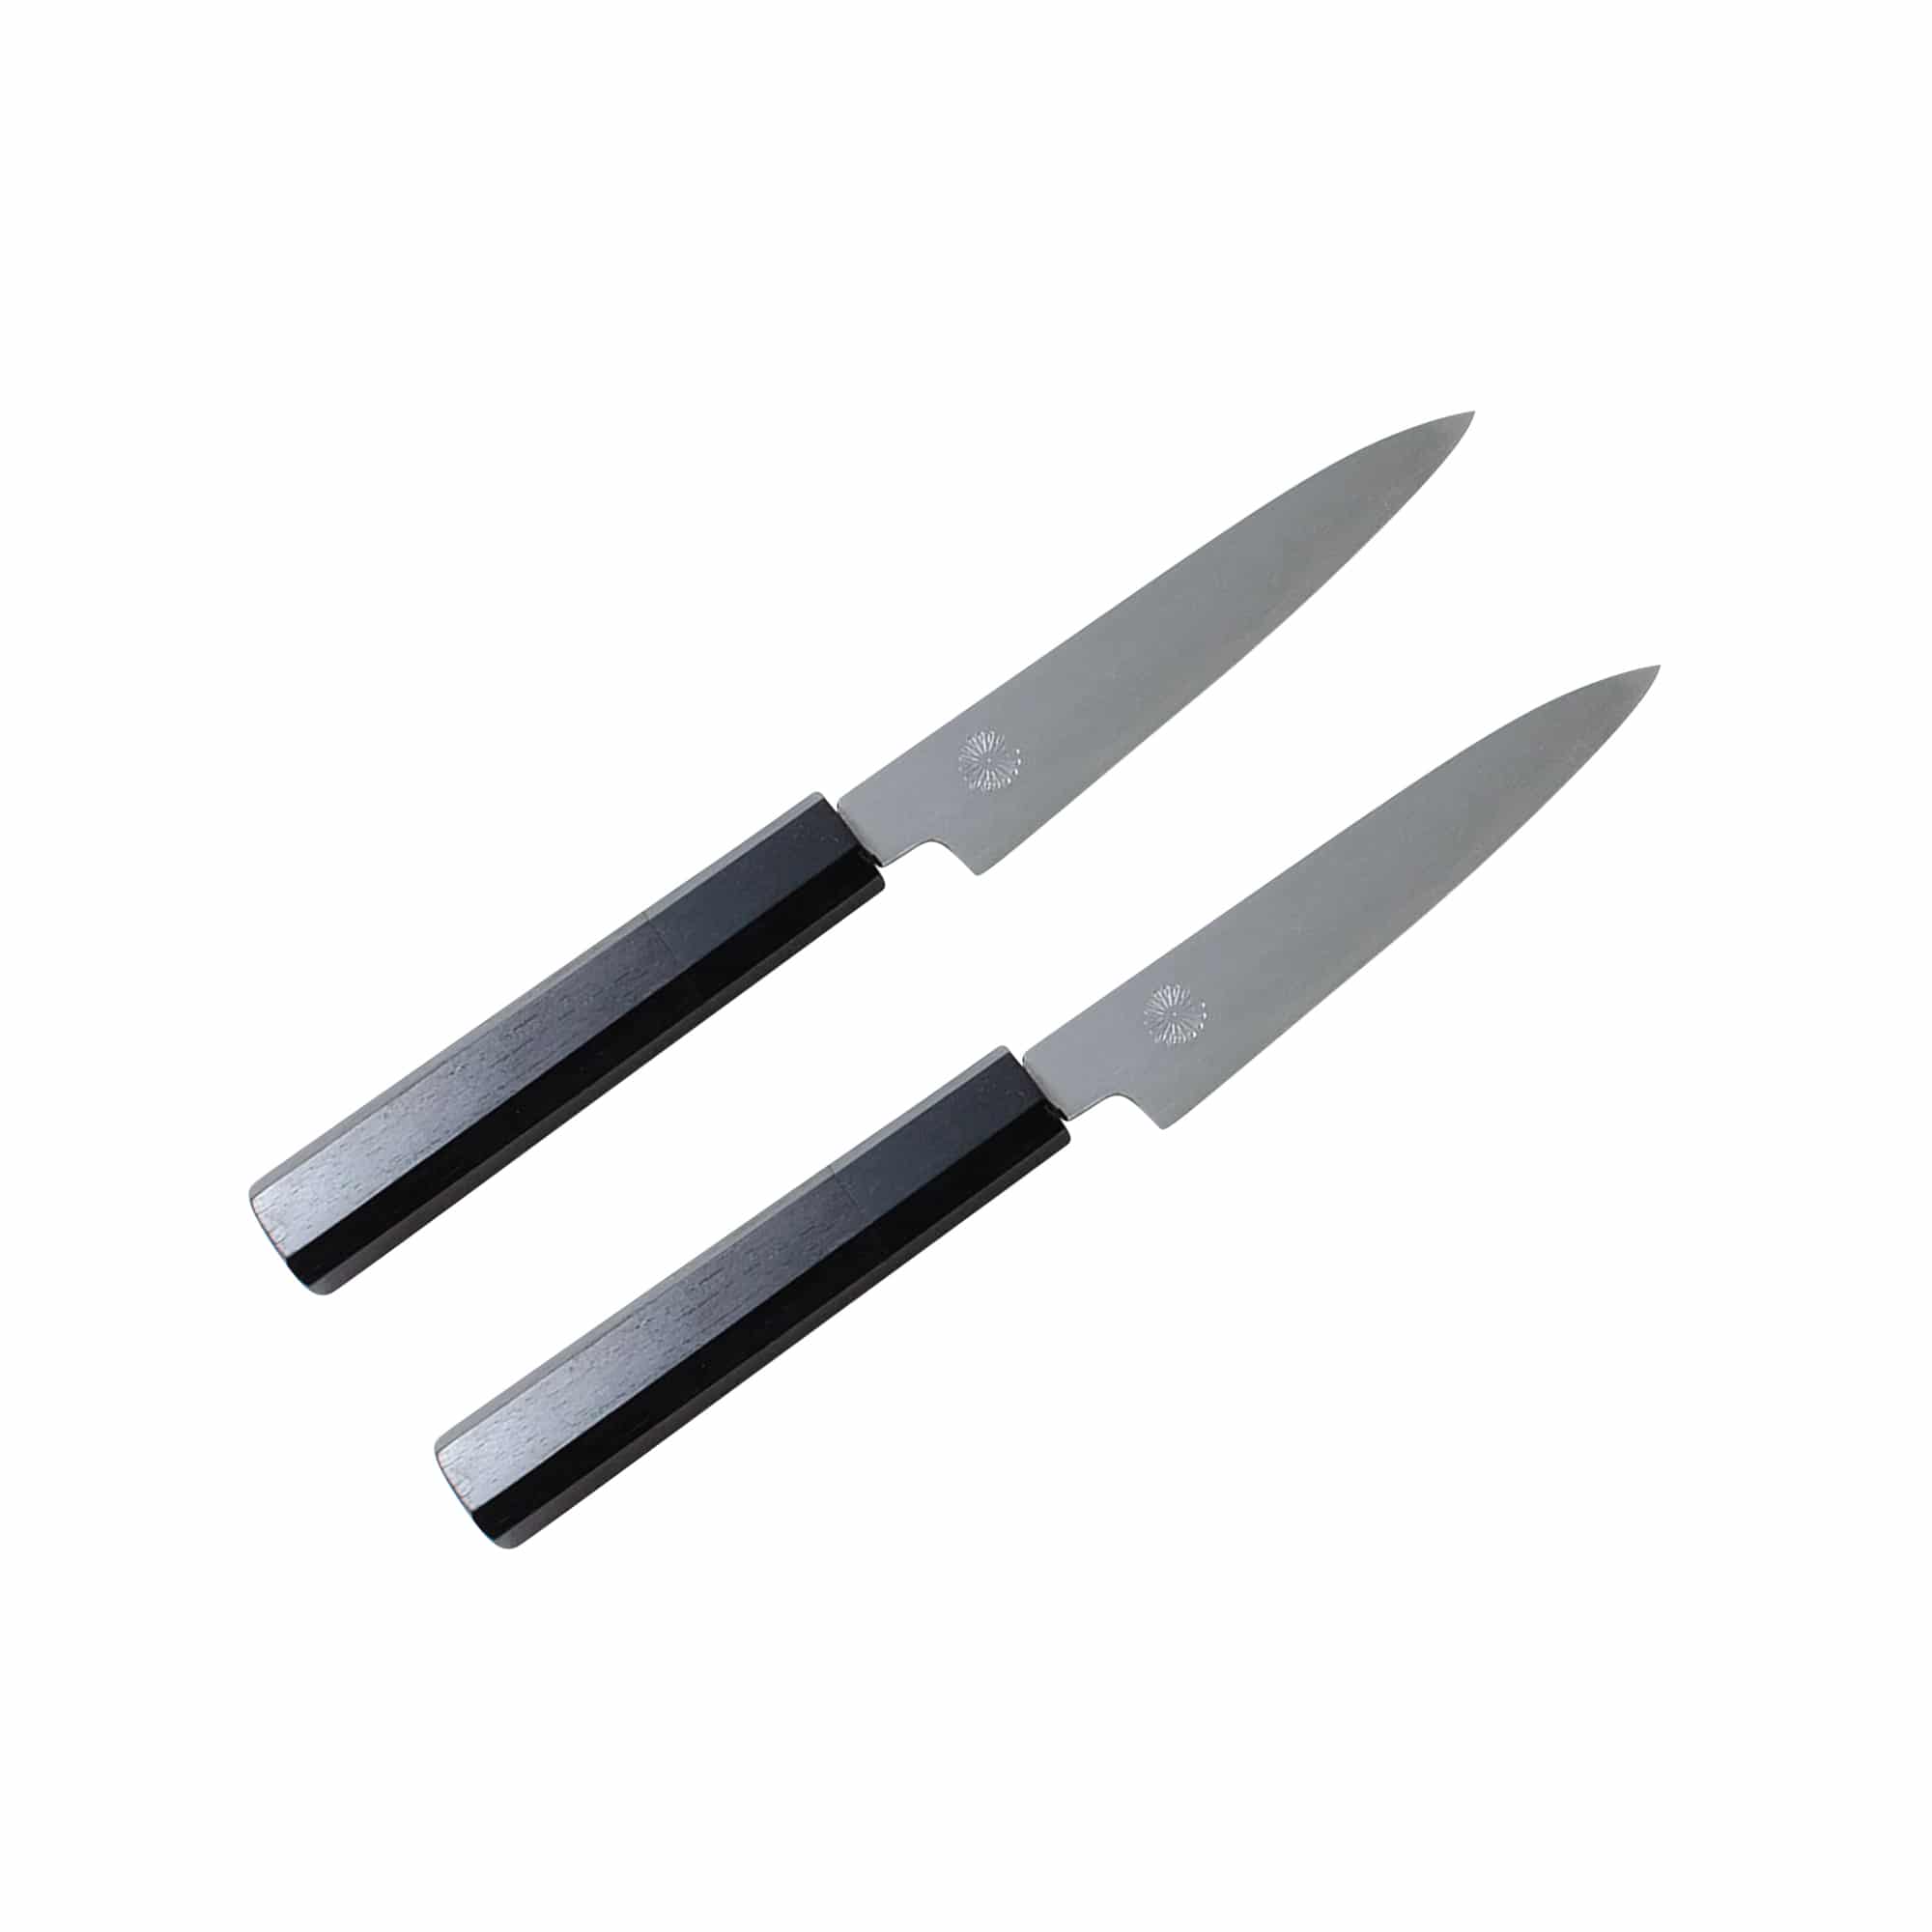 2 Sets of Steak Knives (2x4 Knives) – Kamikoto